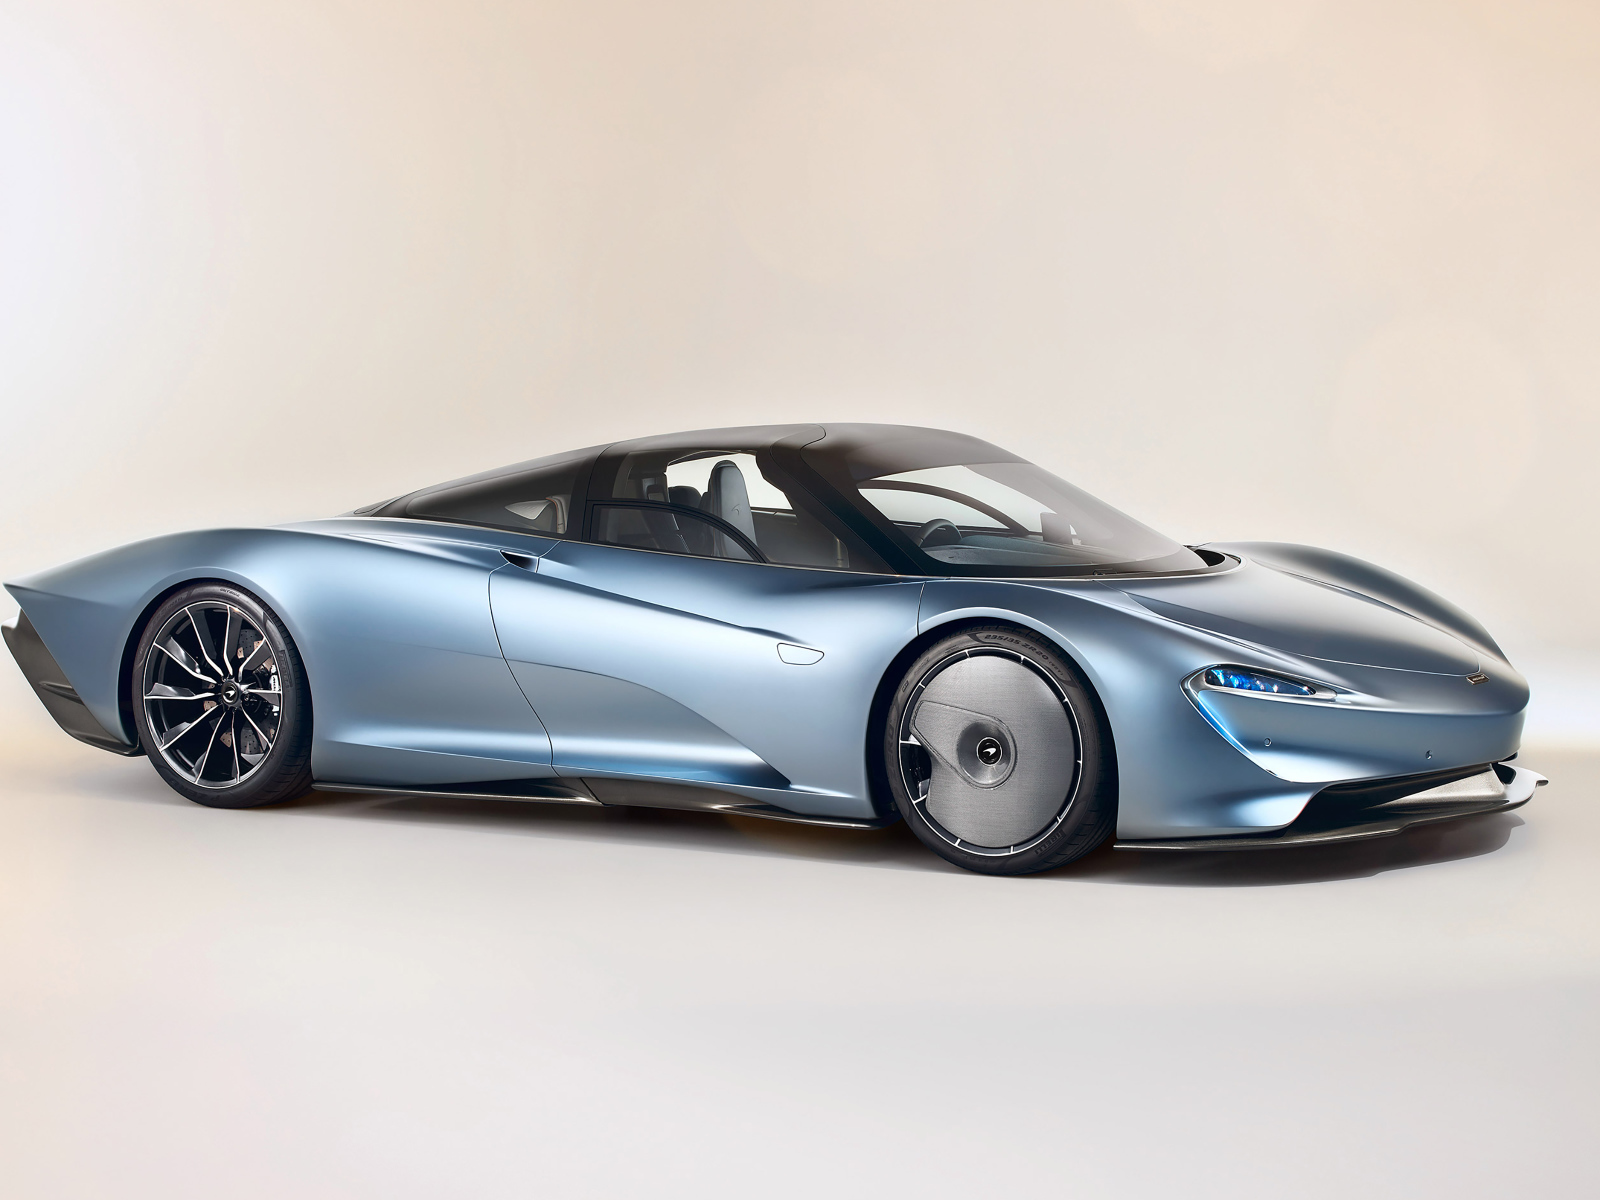 Stylish expensive silver car McLaren Speedtail, 2020